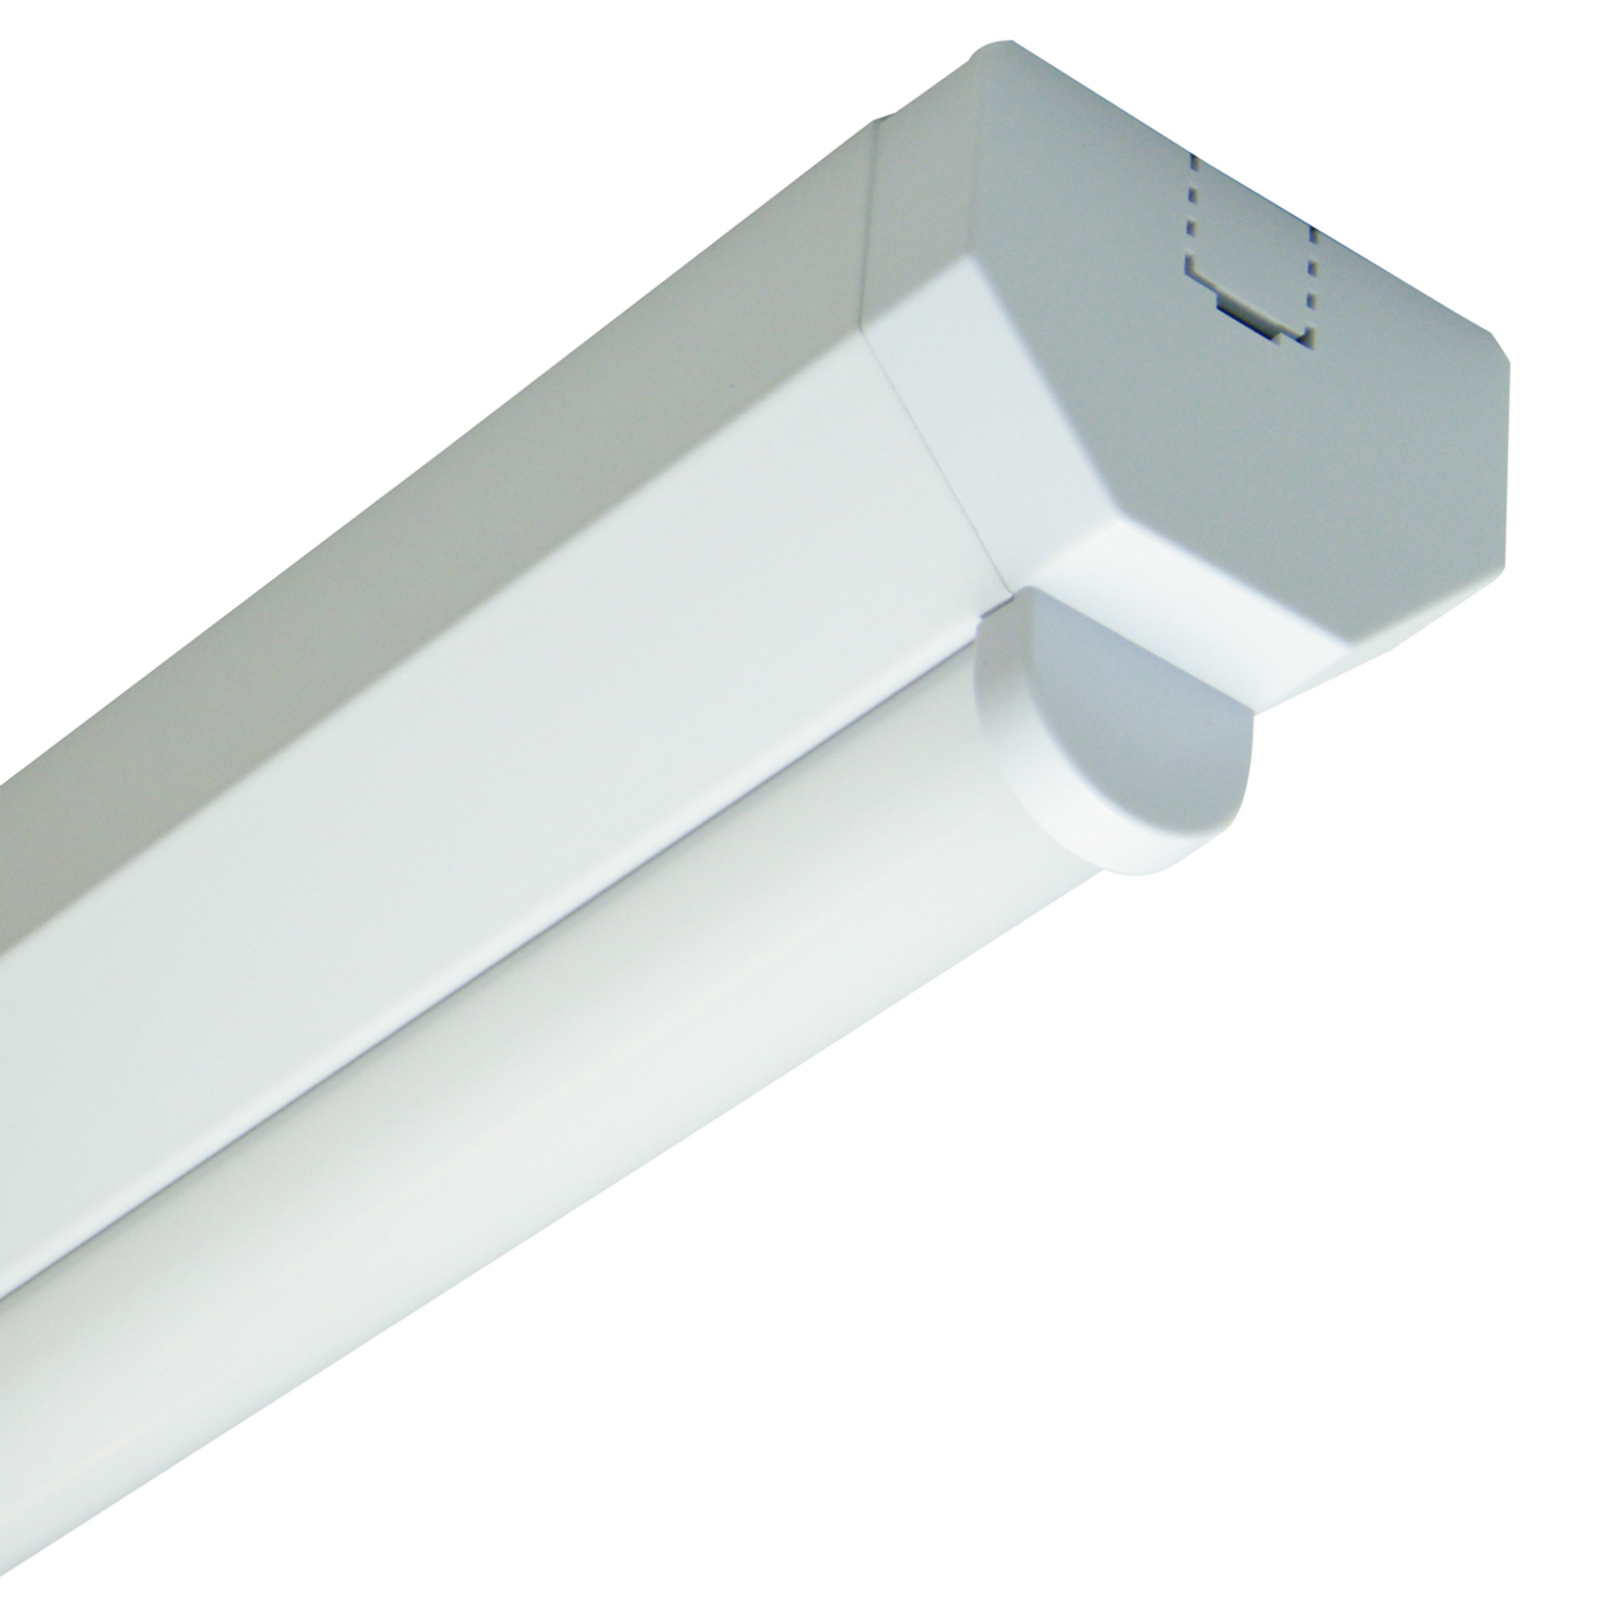 Universelle LED-Deckenlampe Basic 1 - 90cm